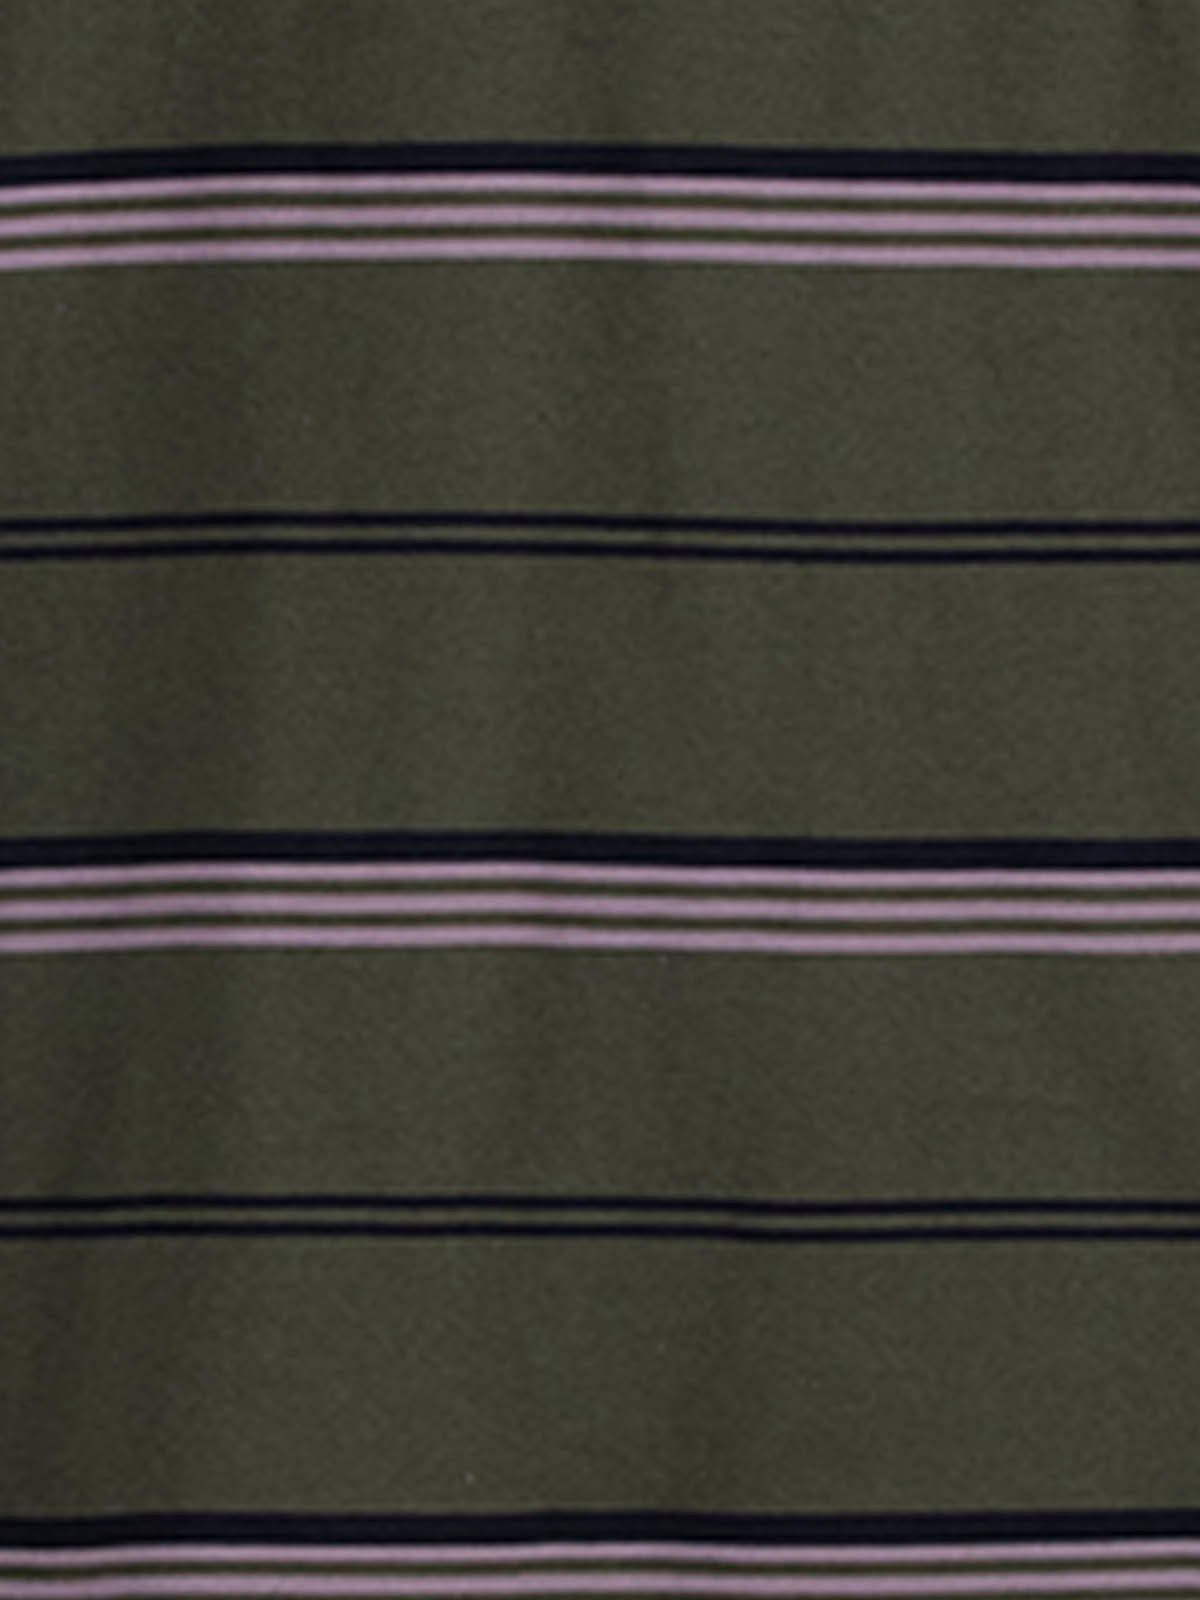 Henry Terre Schlafanzug Pyjama Set Shorty Streifen - olive